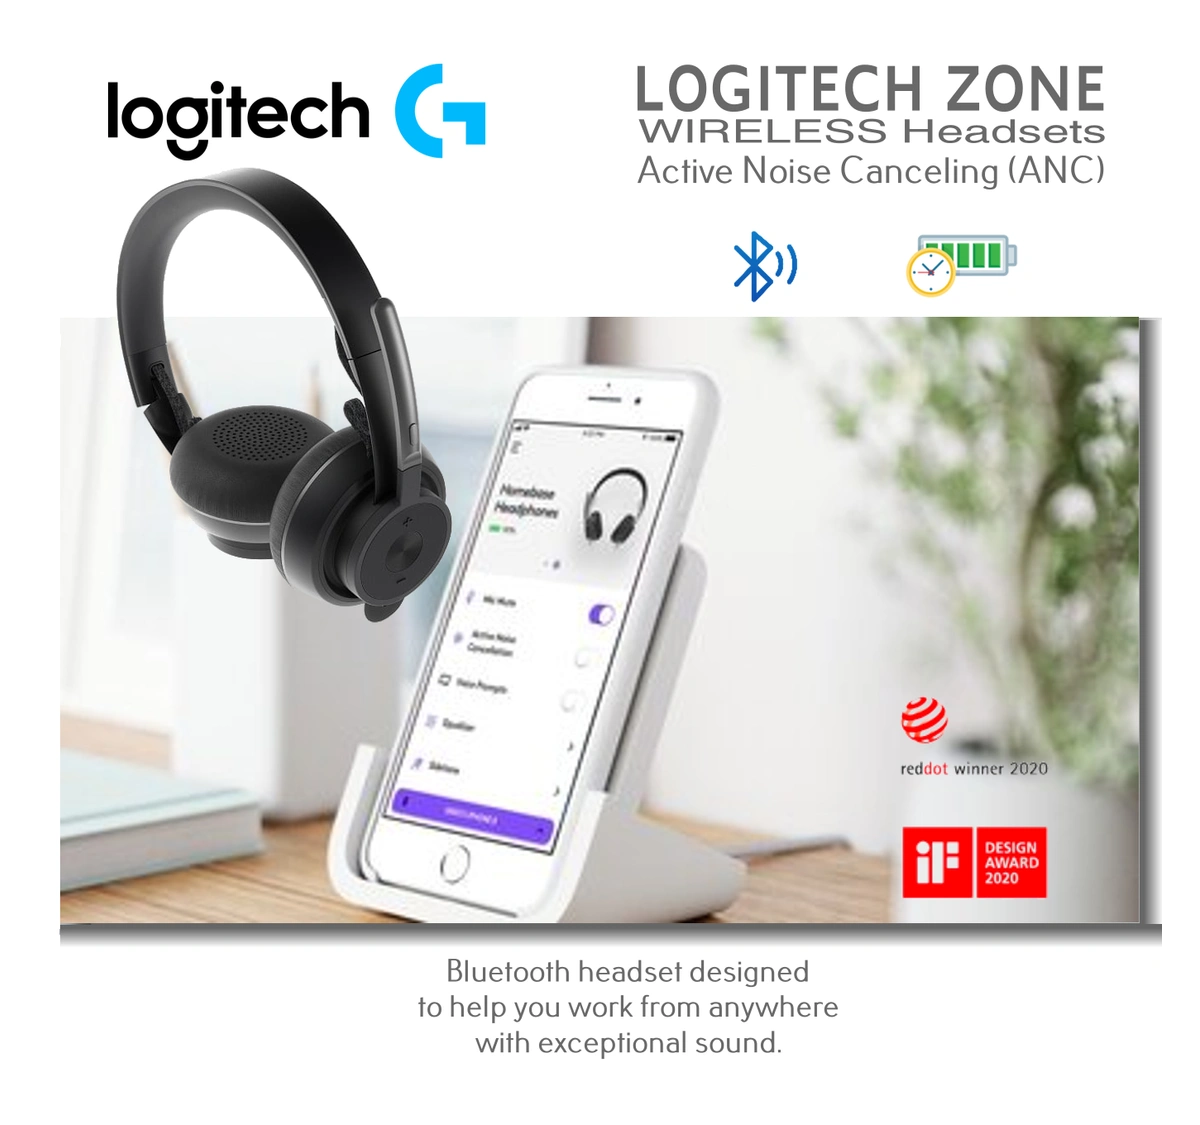 Zone Wireless - Audífonos Bluetooth con micrófono